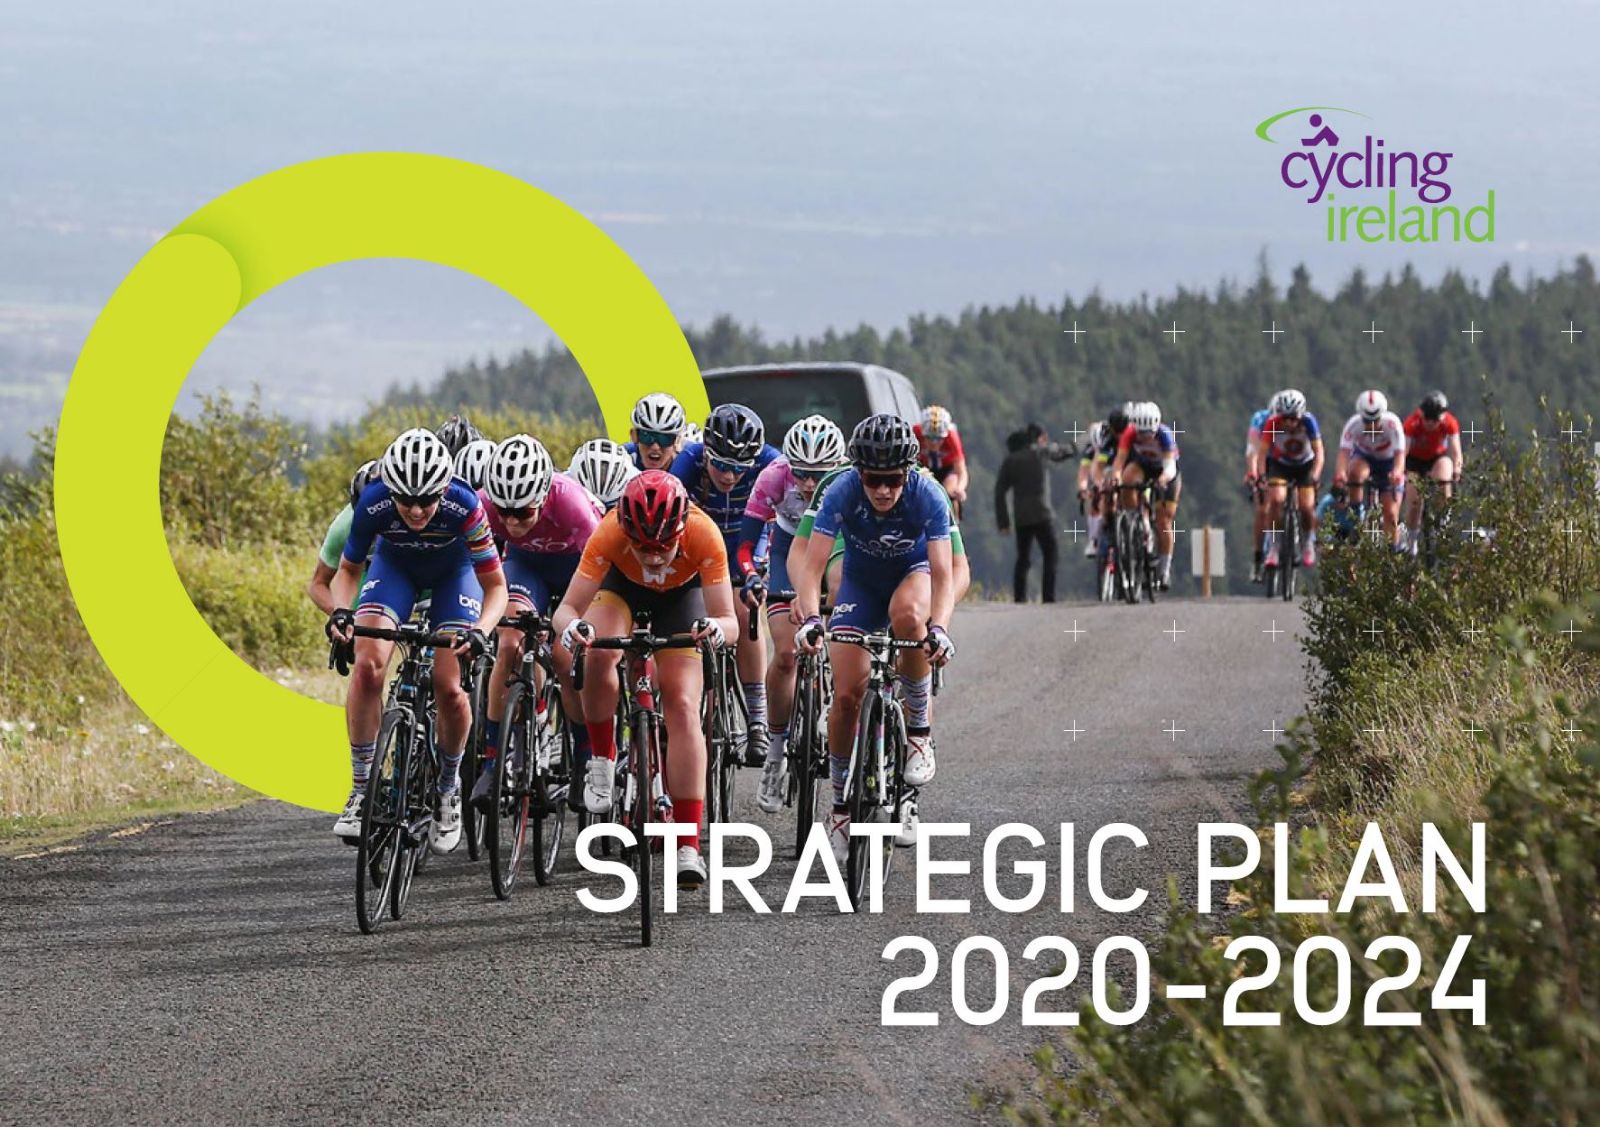 Strategic Plan 2020-2024